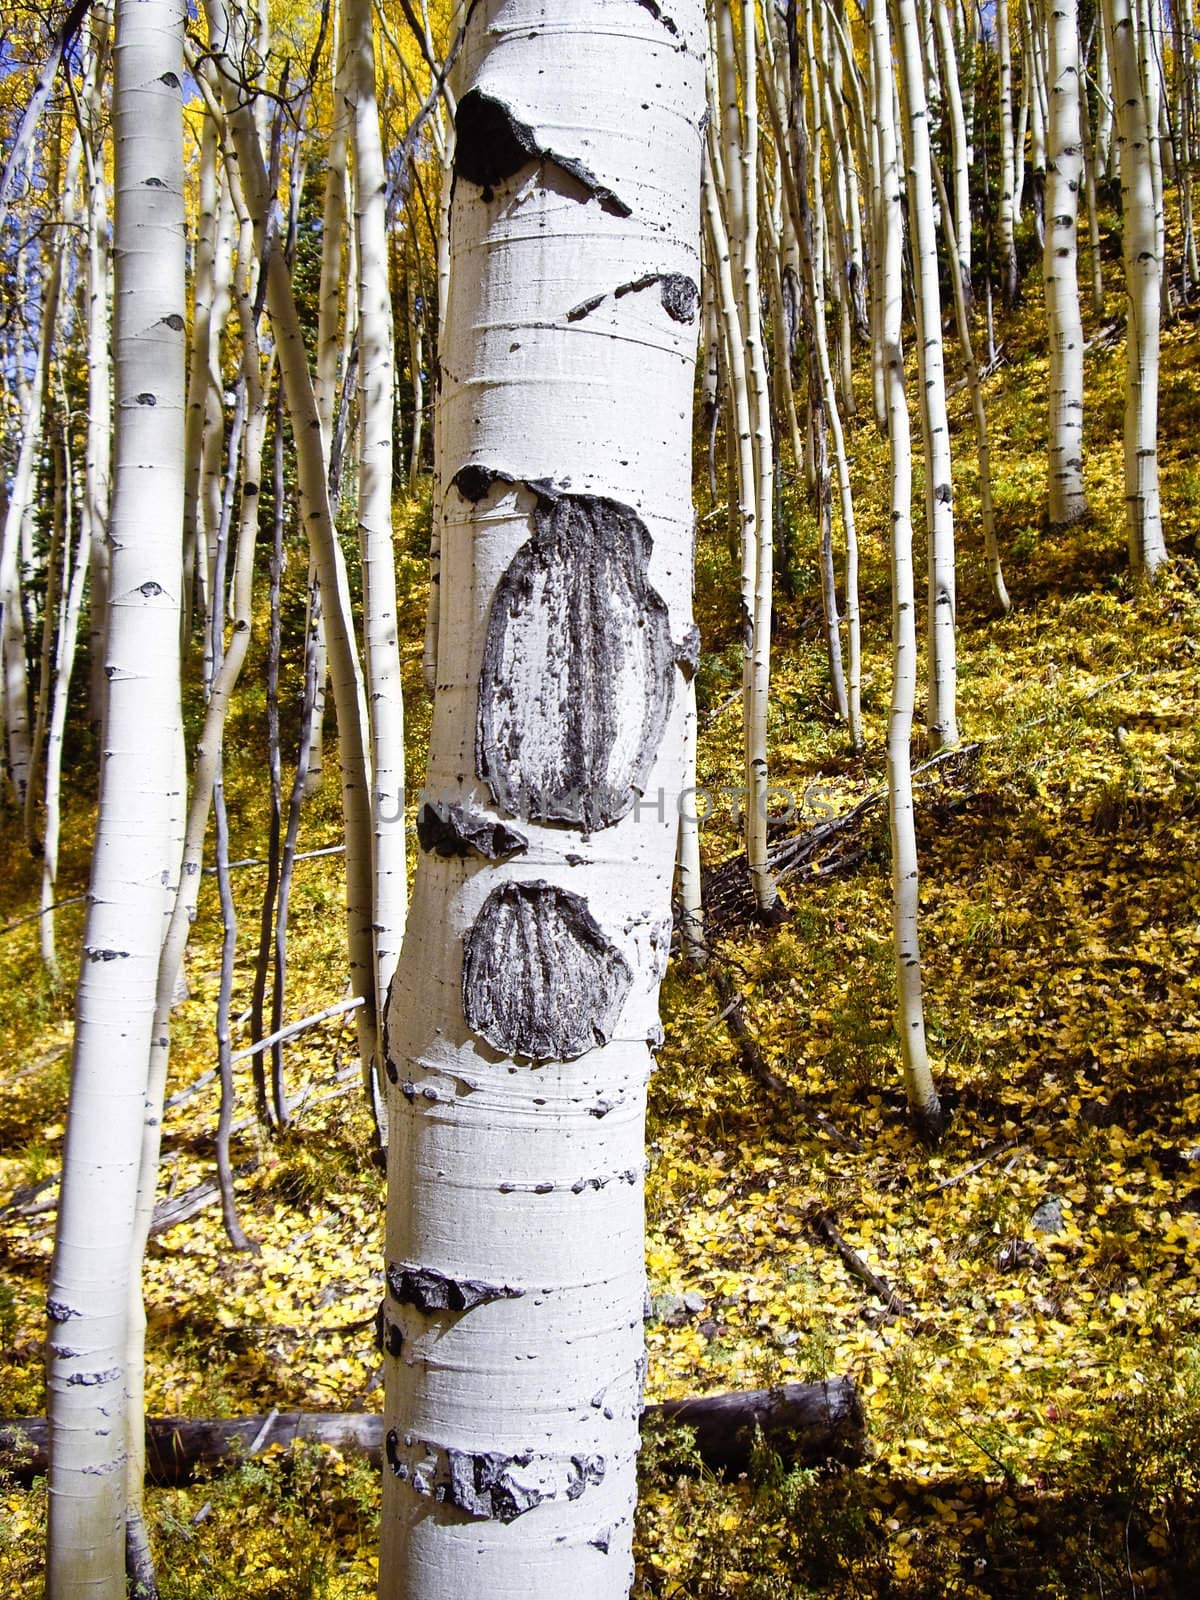 Aspen bark during Fall in Colorado high country